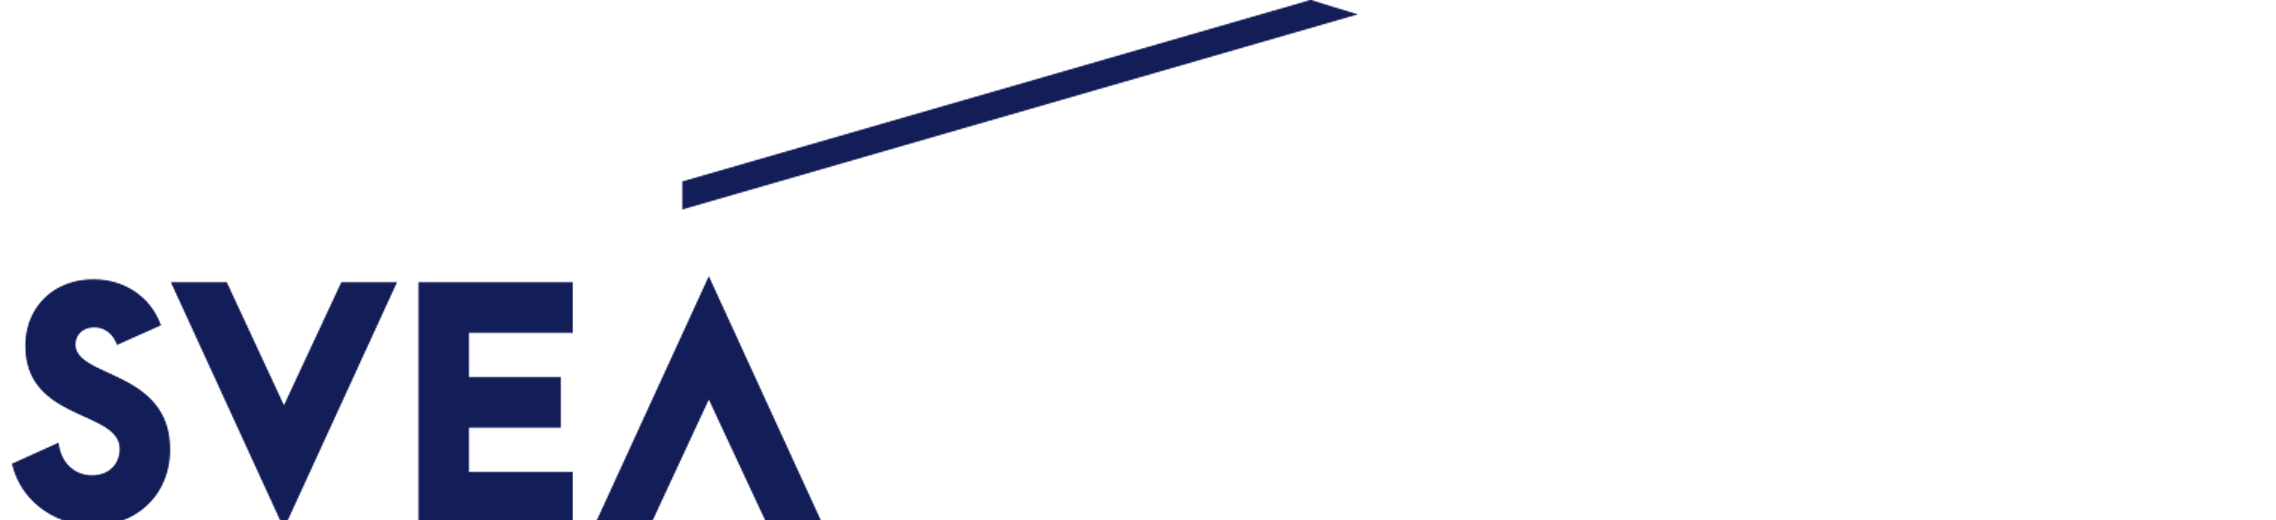 SVEA-TAKVÅRD-light blue logo